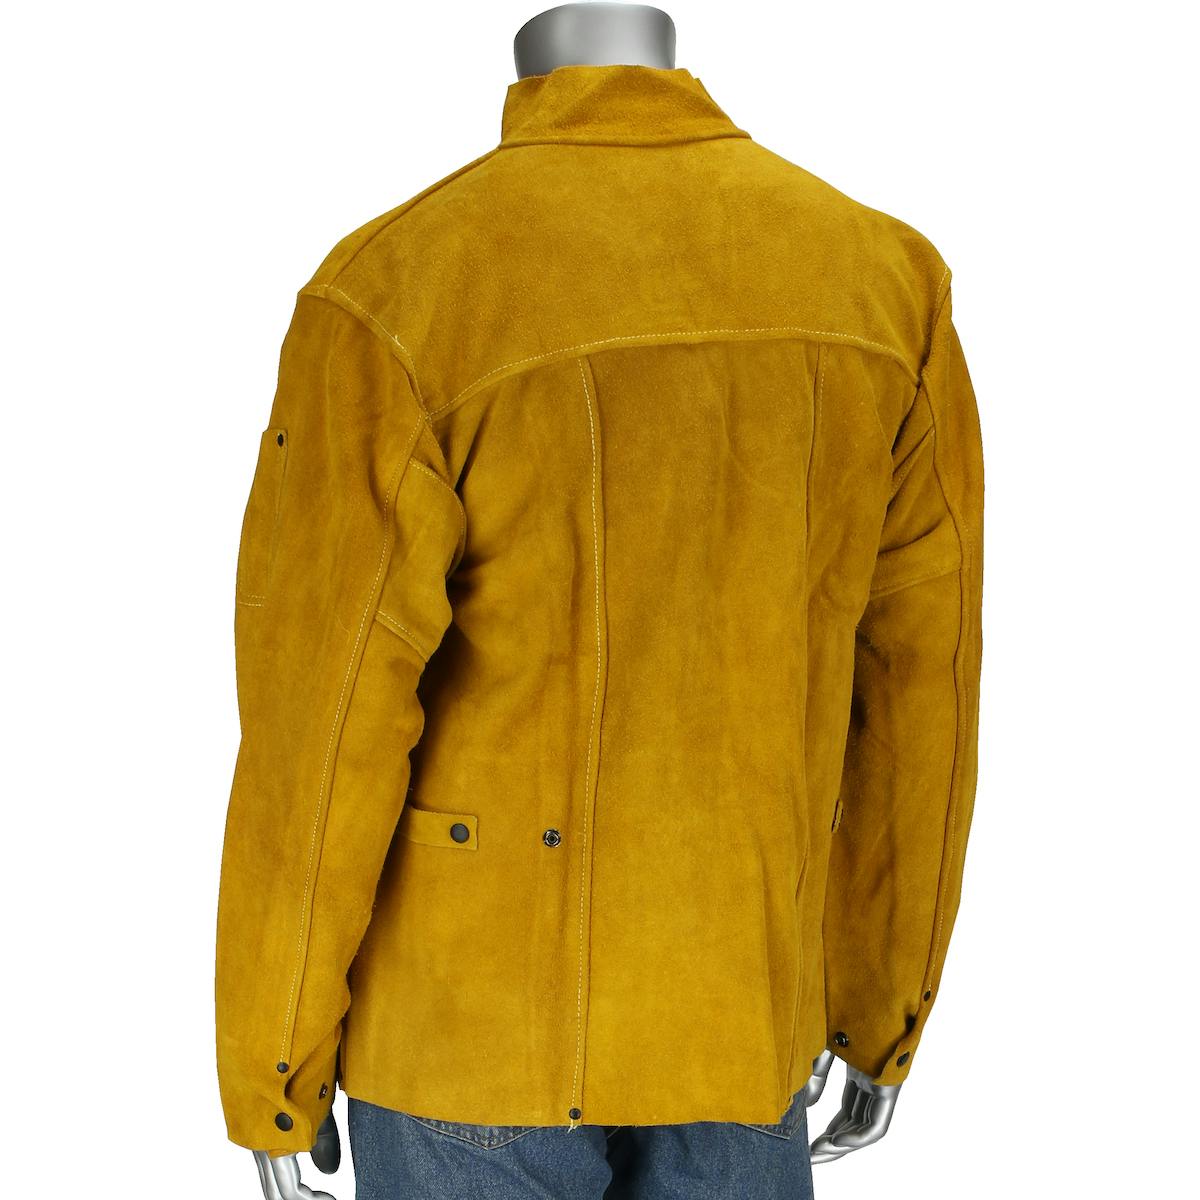 Ironcat® Split Leather Welding Jacket, Gold (7005)